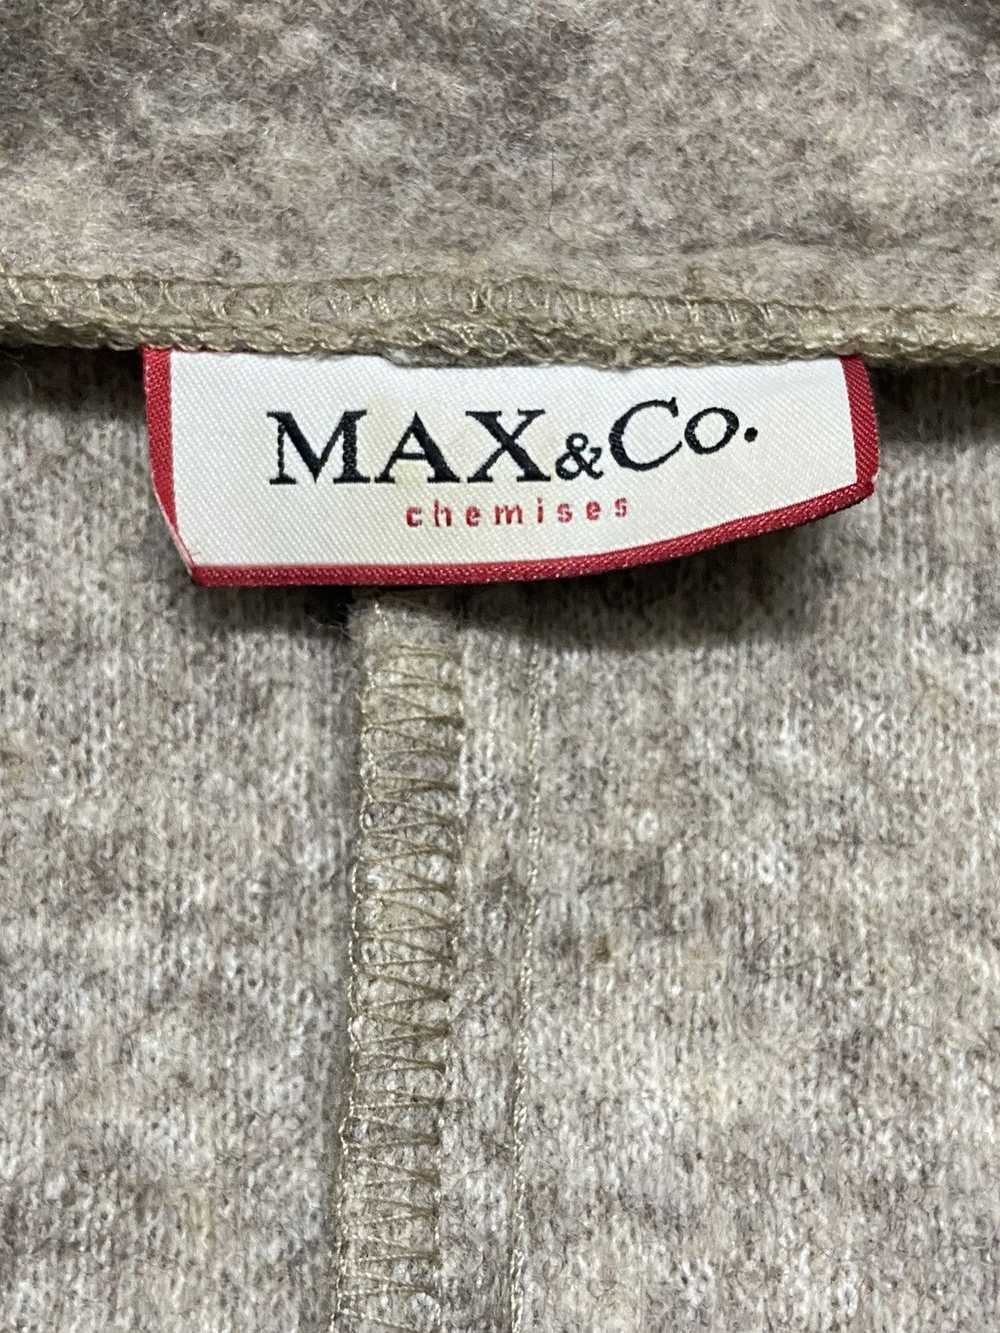 Max & Co. × Max Mara Max&Co. chemises Wools Jacket - image 3